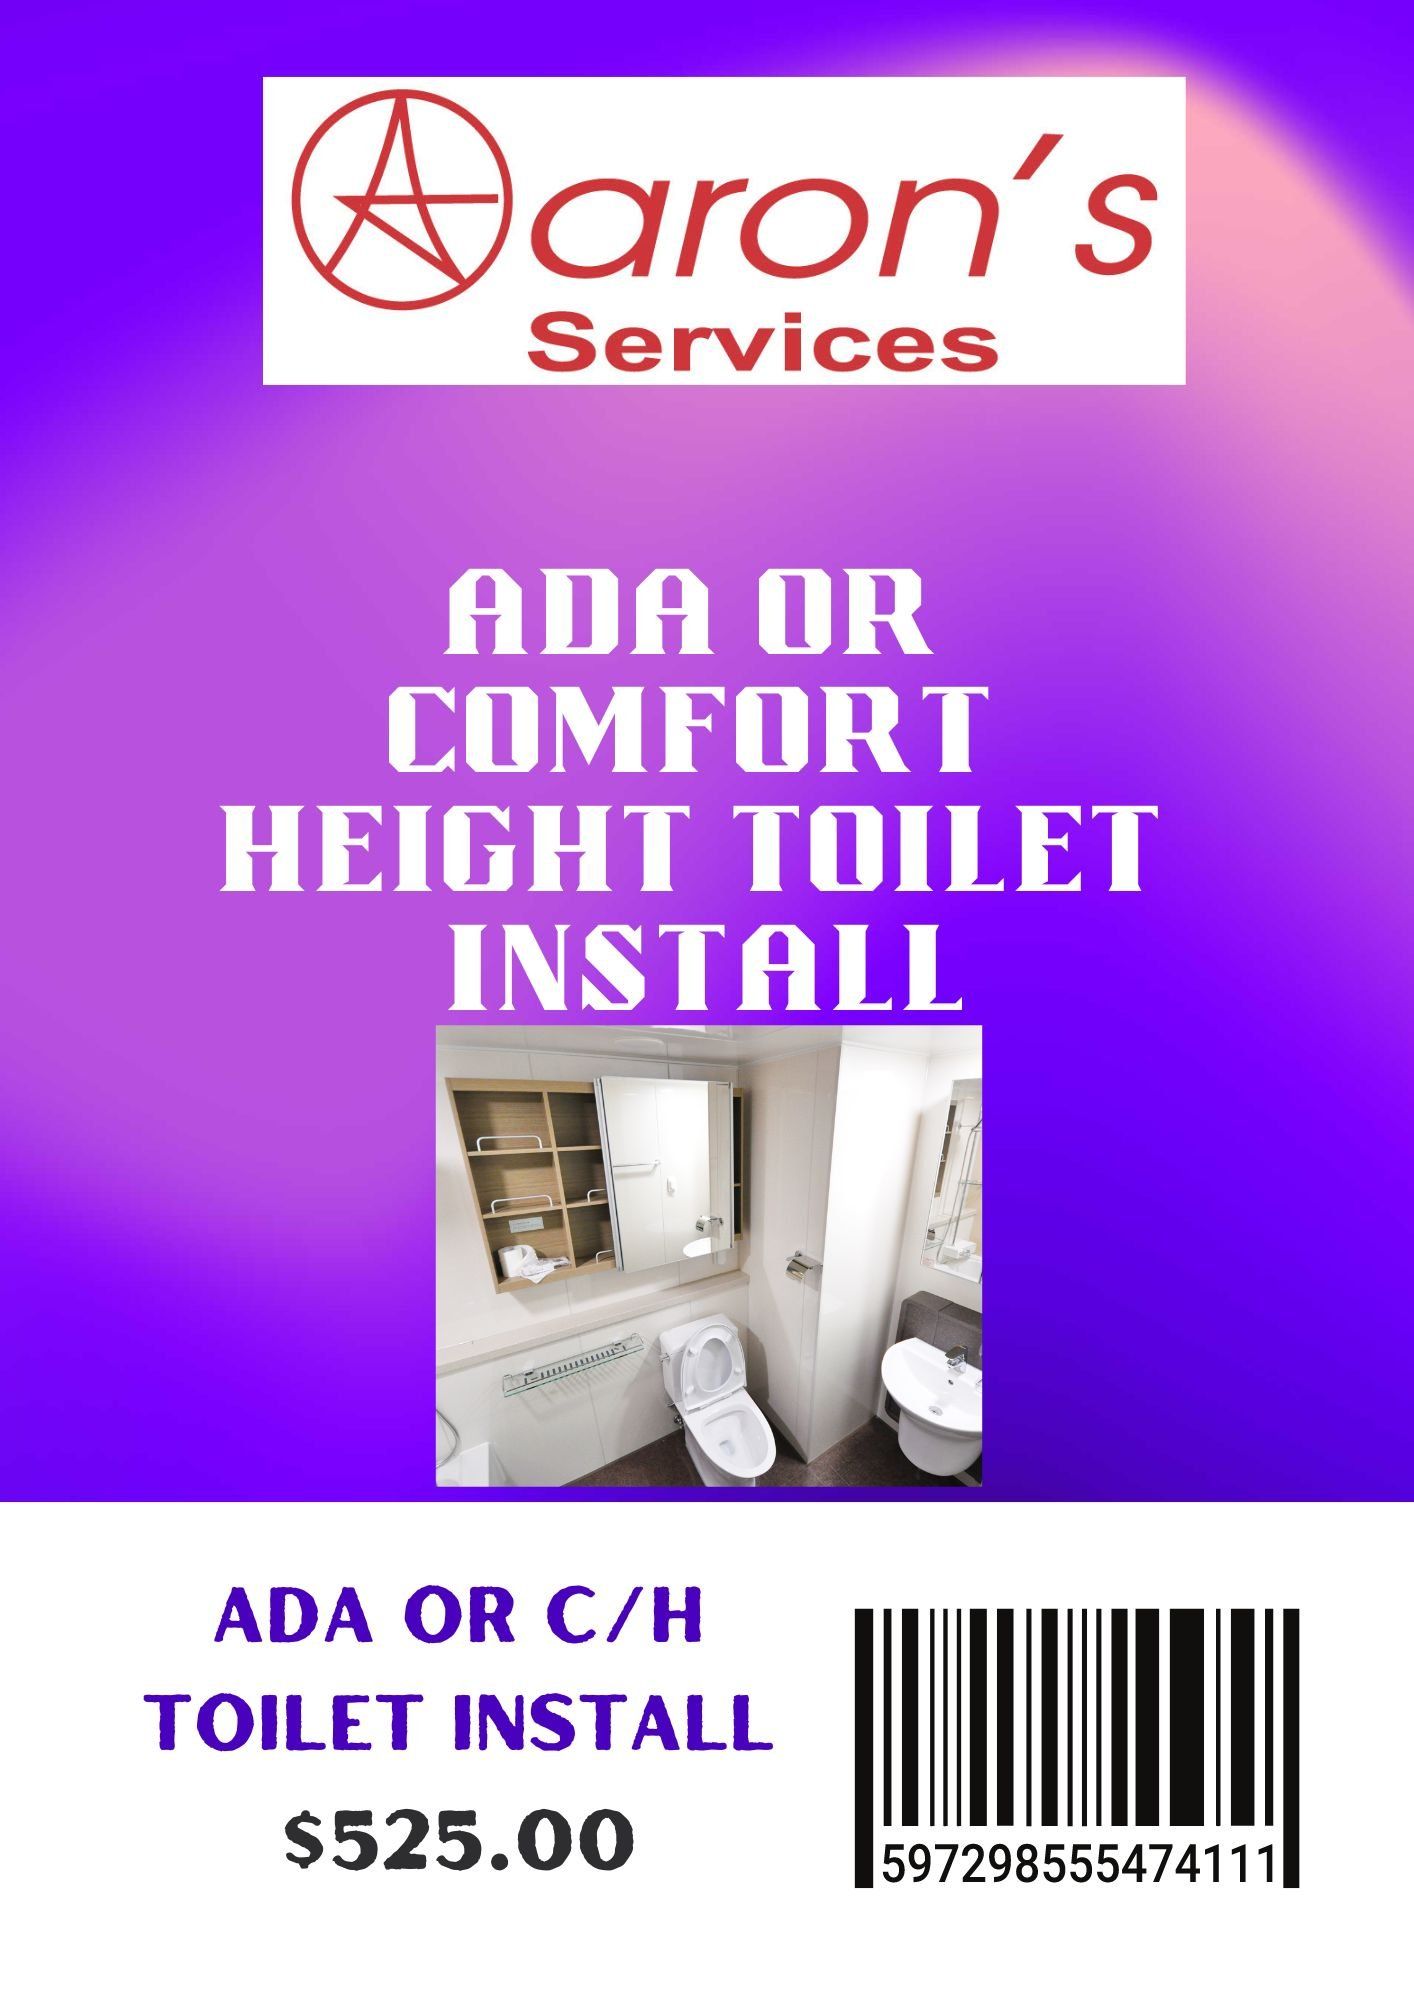 ADA Toilet Install Special